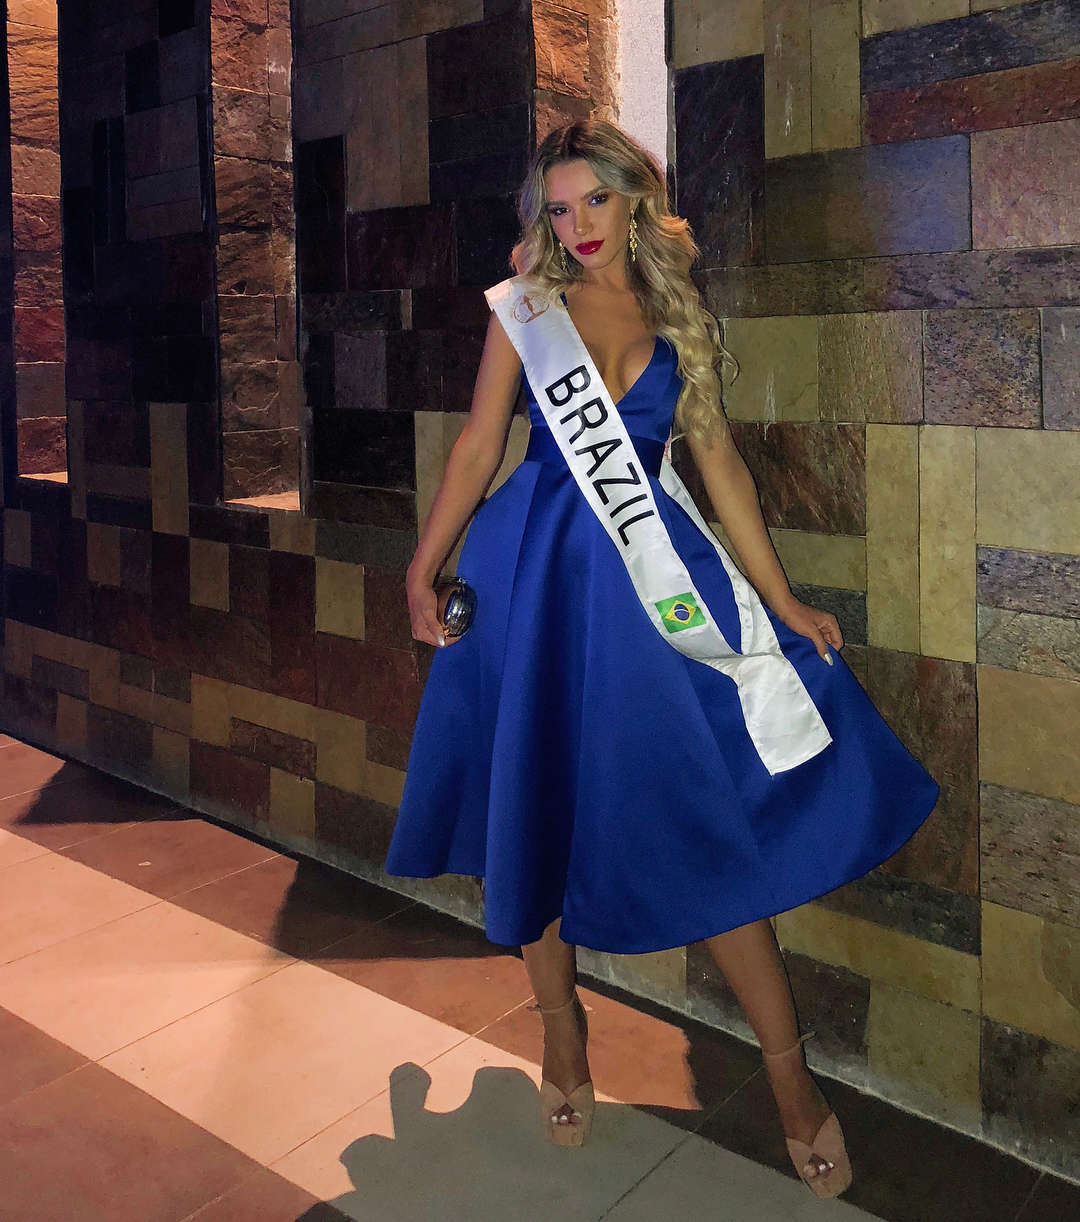 amanda cardoso, miss grand espirito santo 2019/3rd runner-up de miss intercontinental 2017. - Página 5 26870310